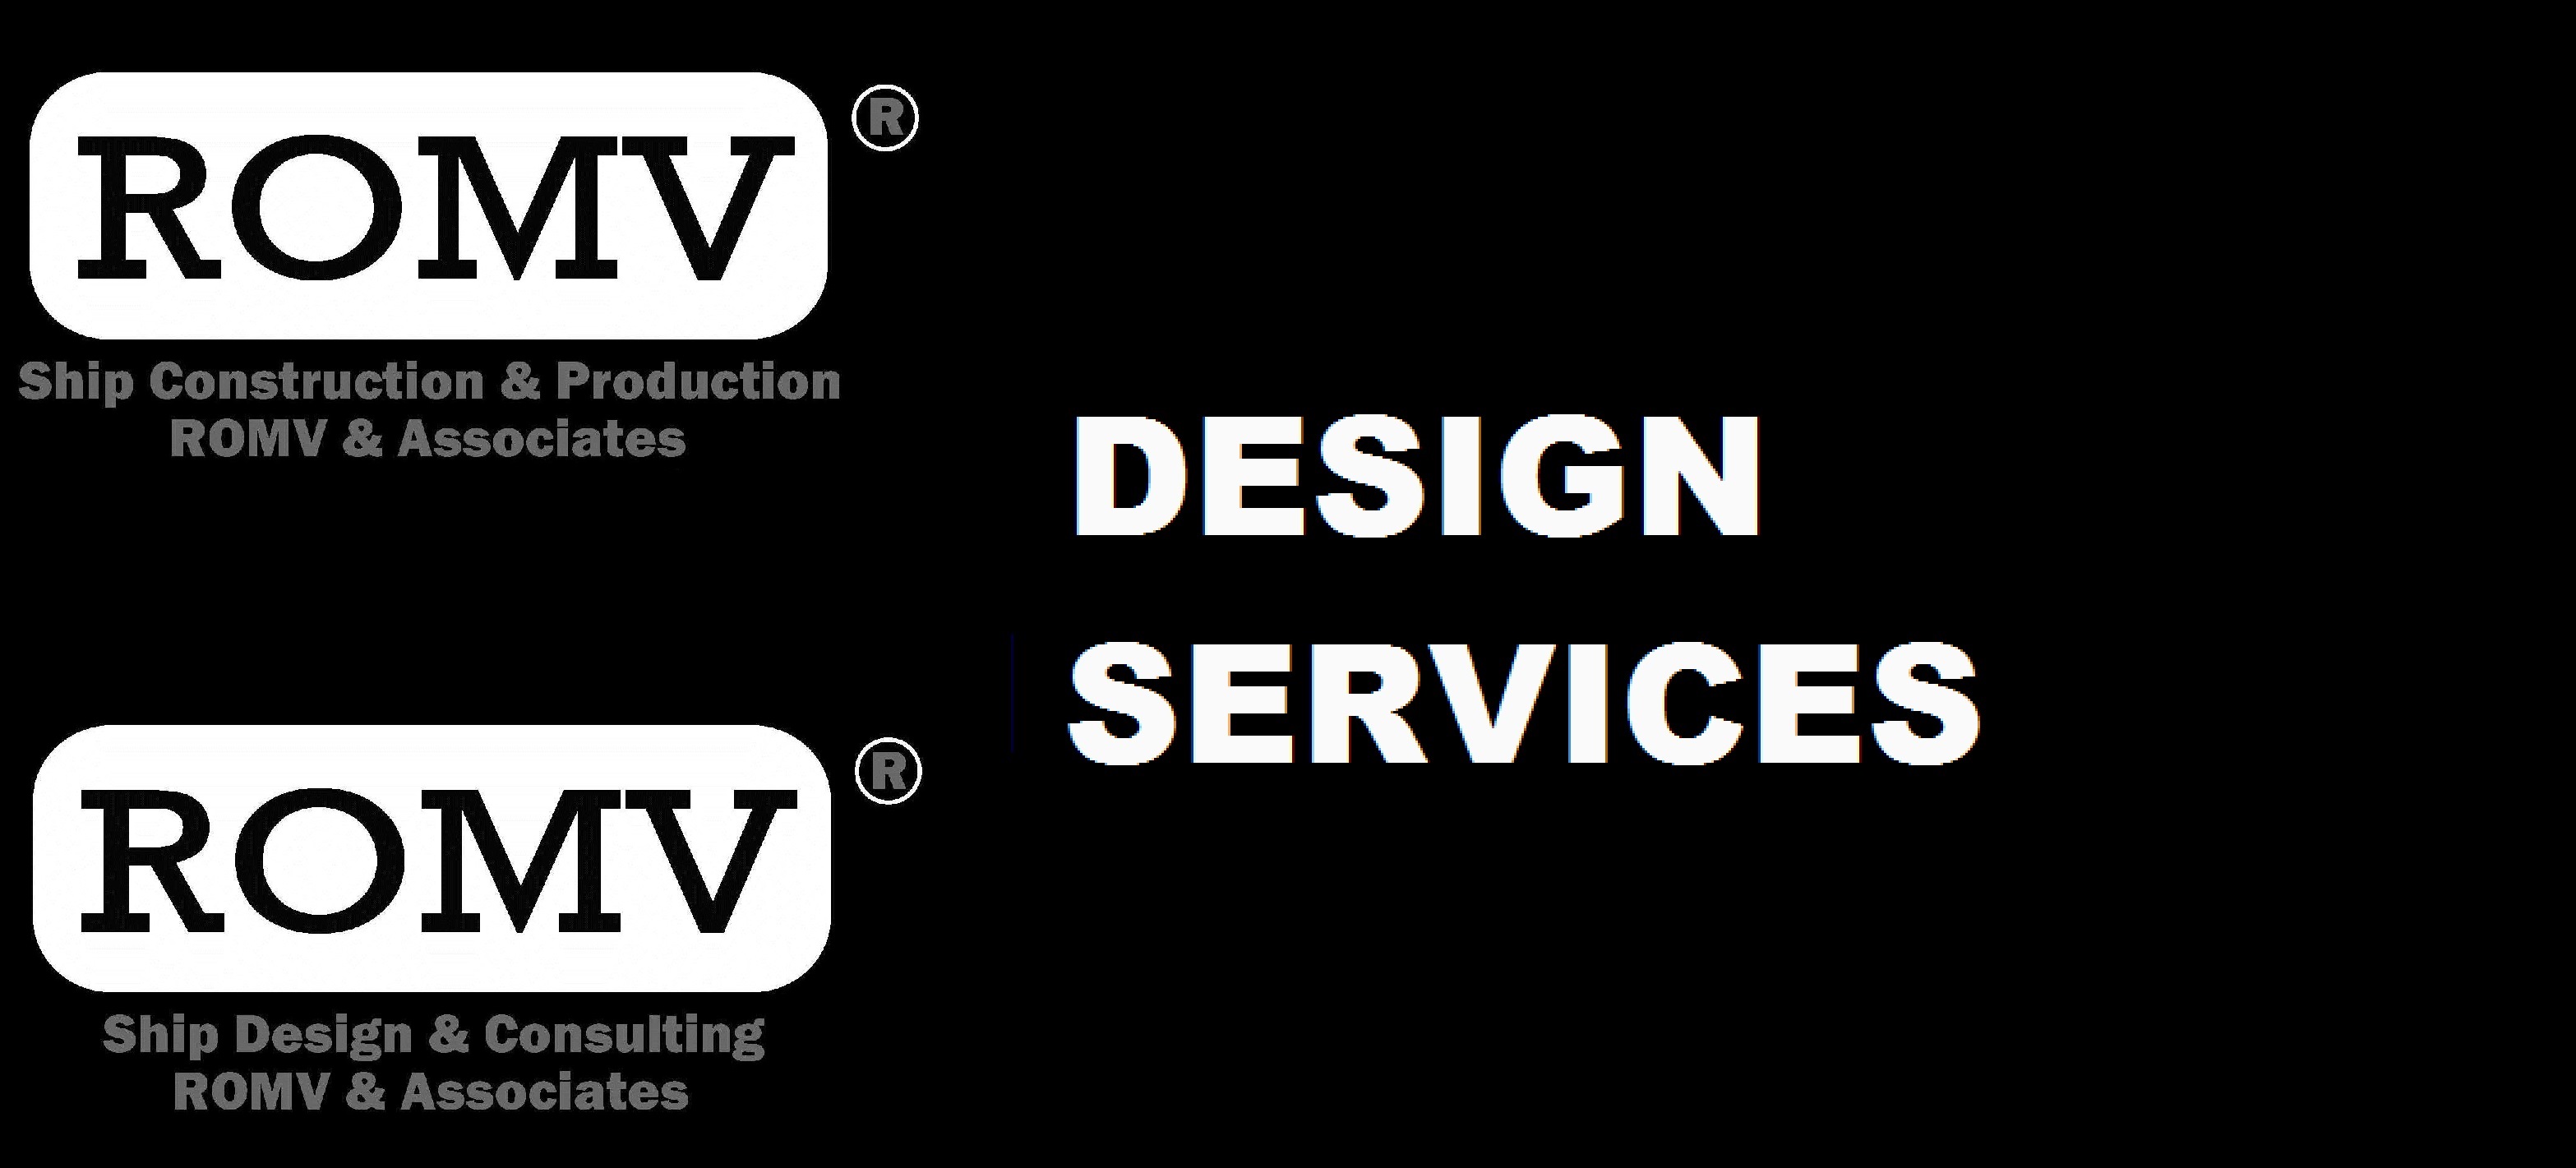 ROMV Design Services